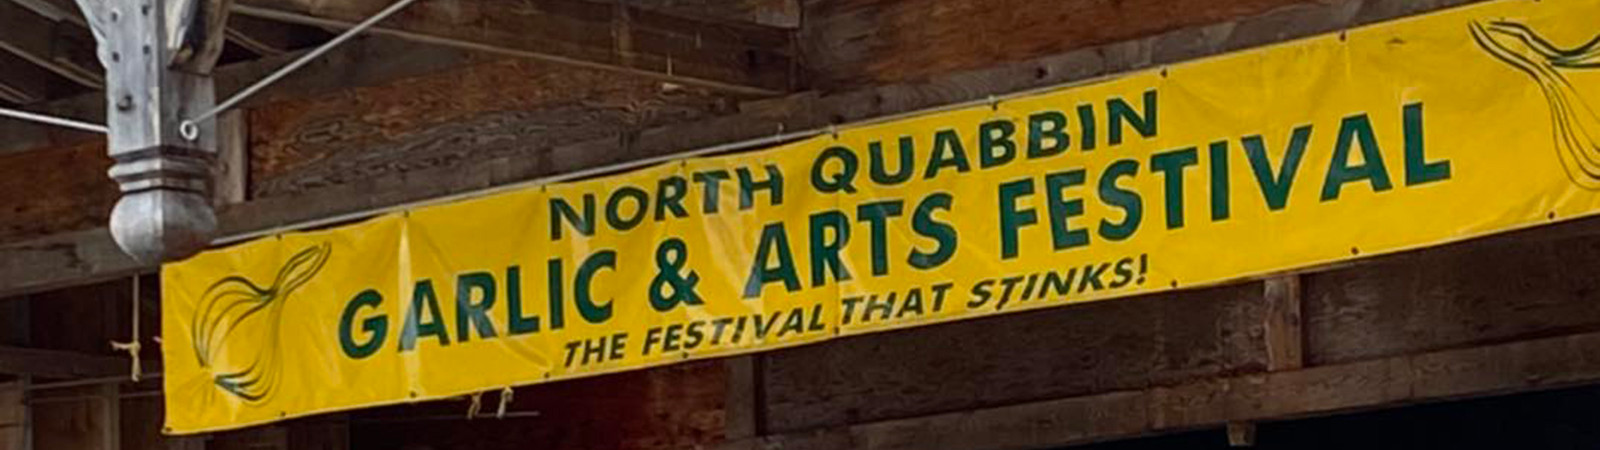 North Quabbin Garlic & Arts Festival